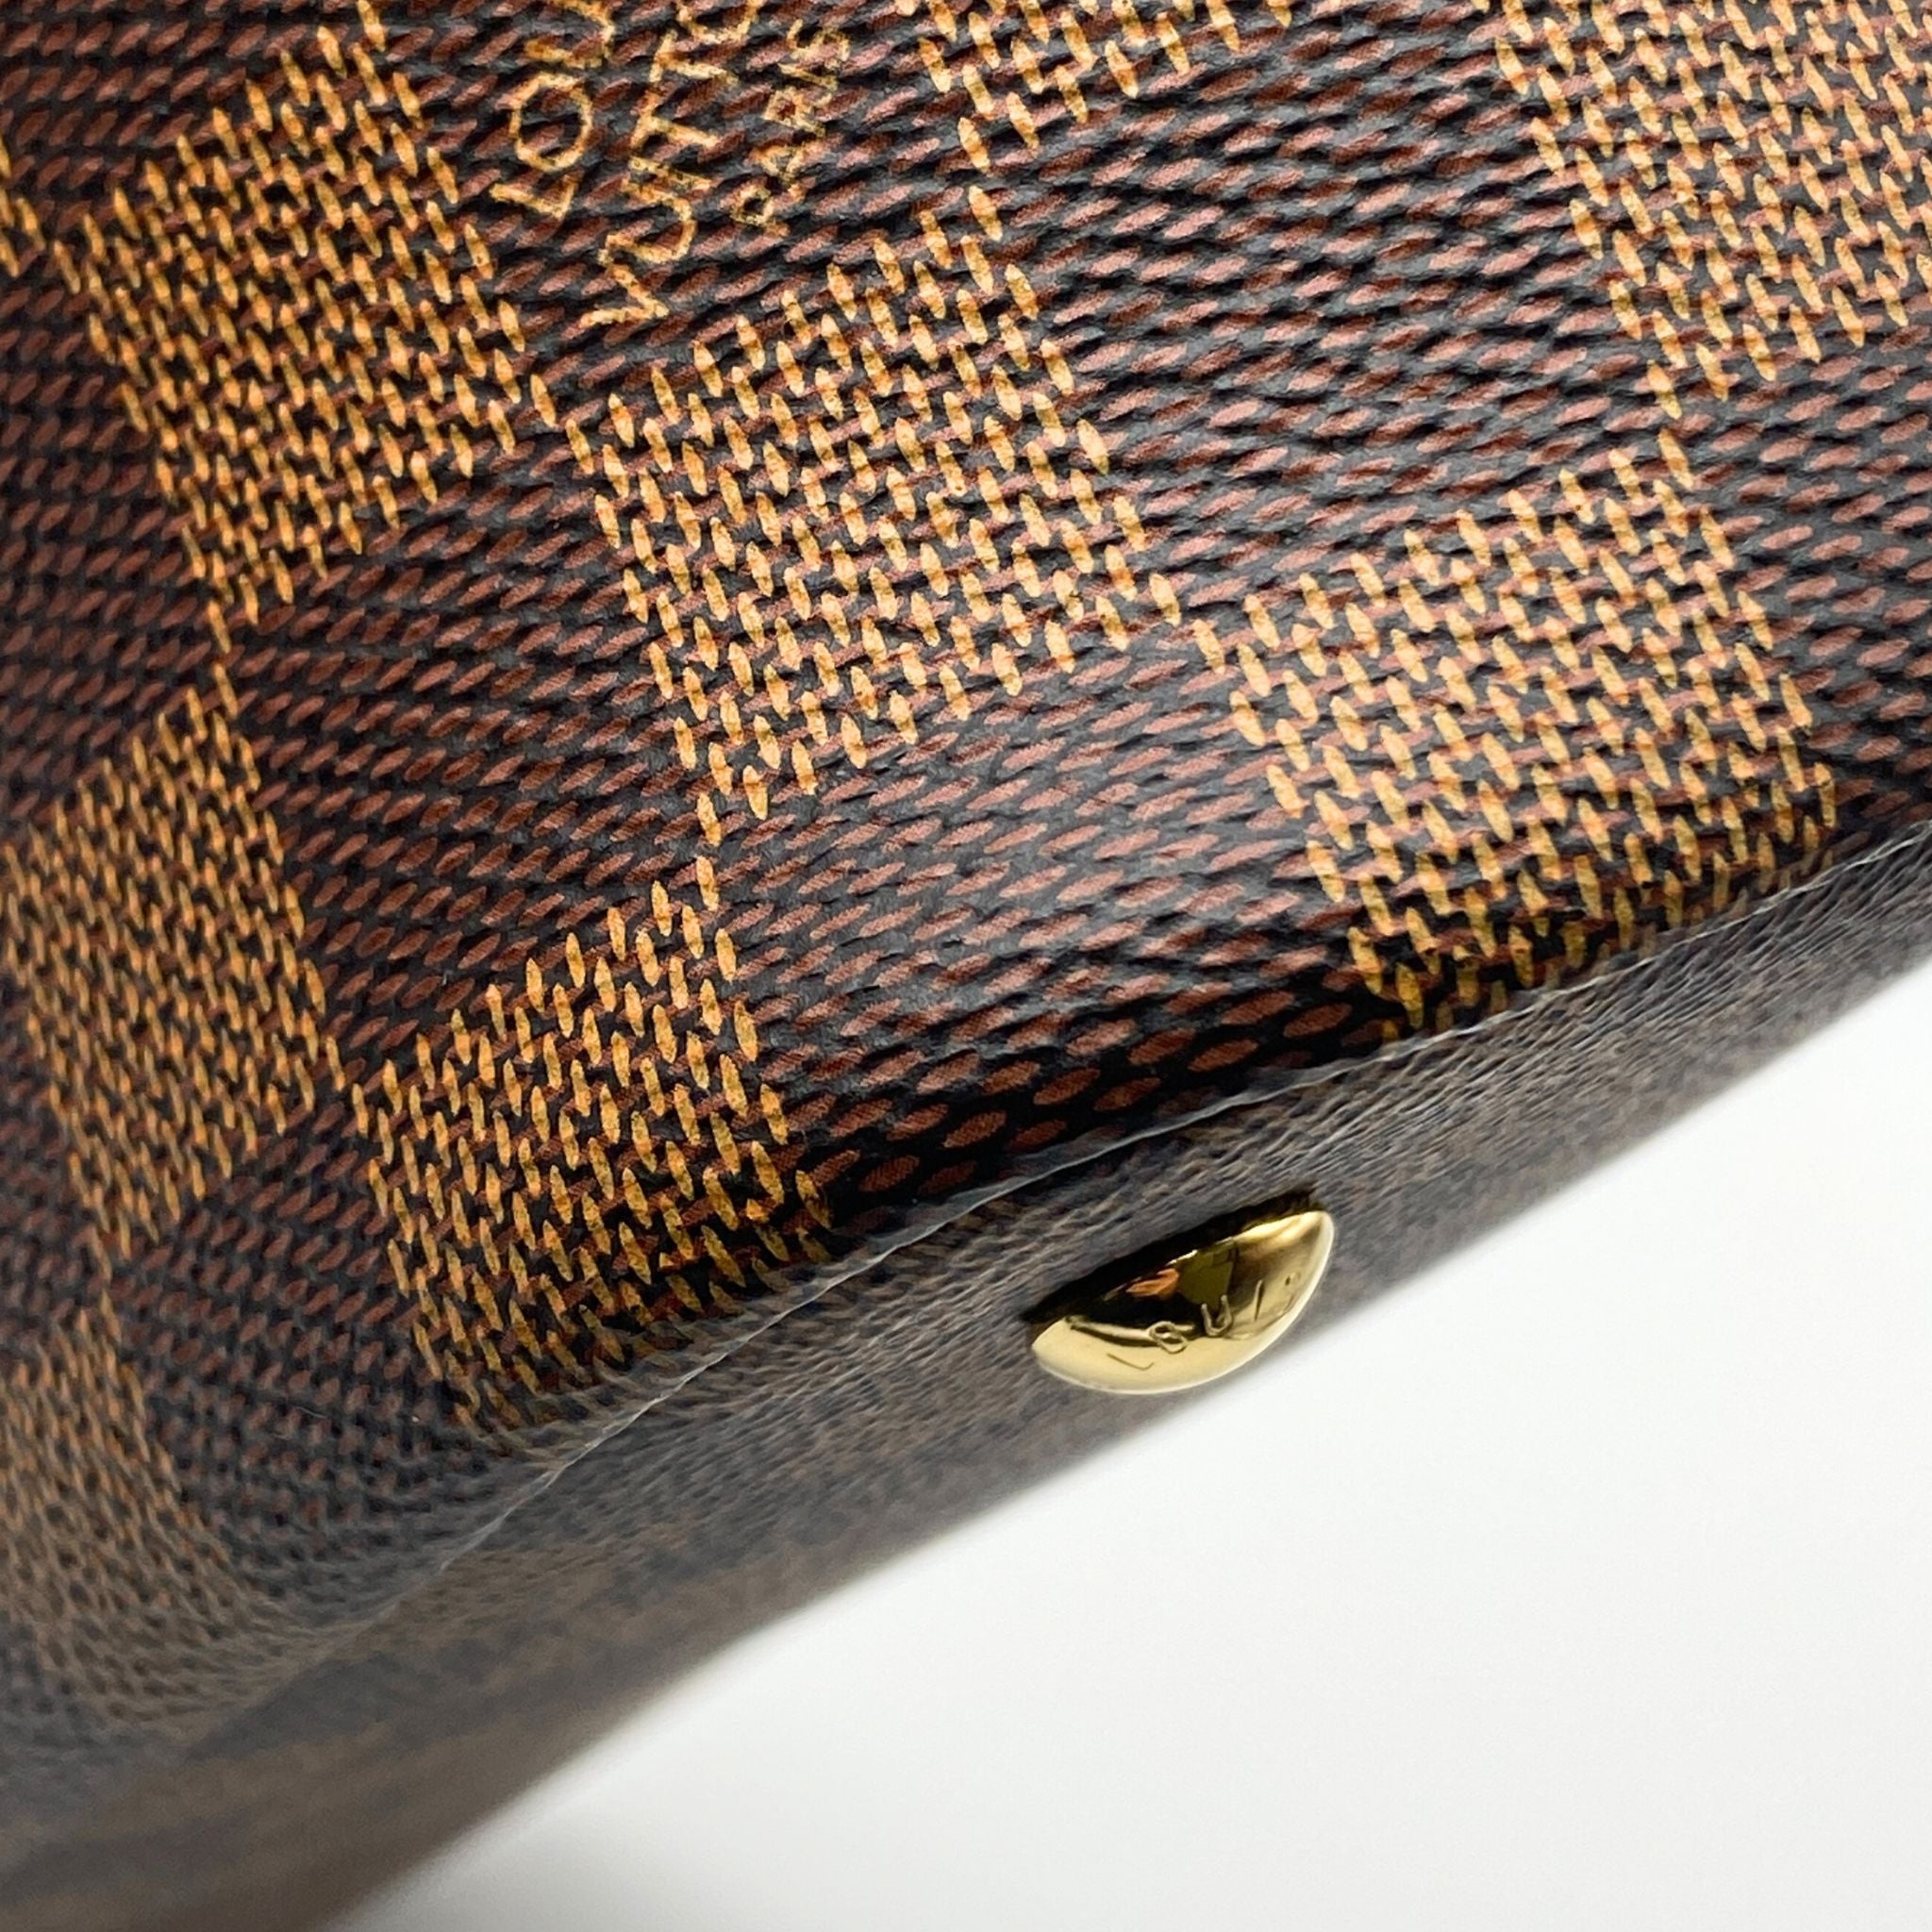 Louis Vuitton Kensington Damier Ebene Tote Shoulder Bag